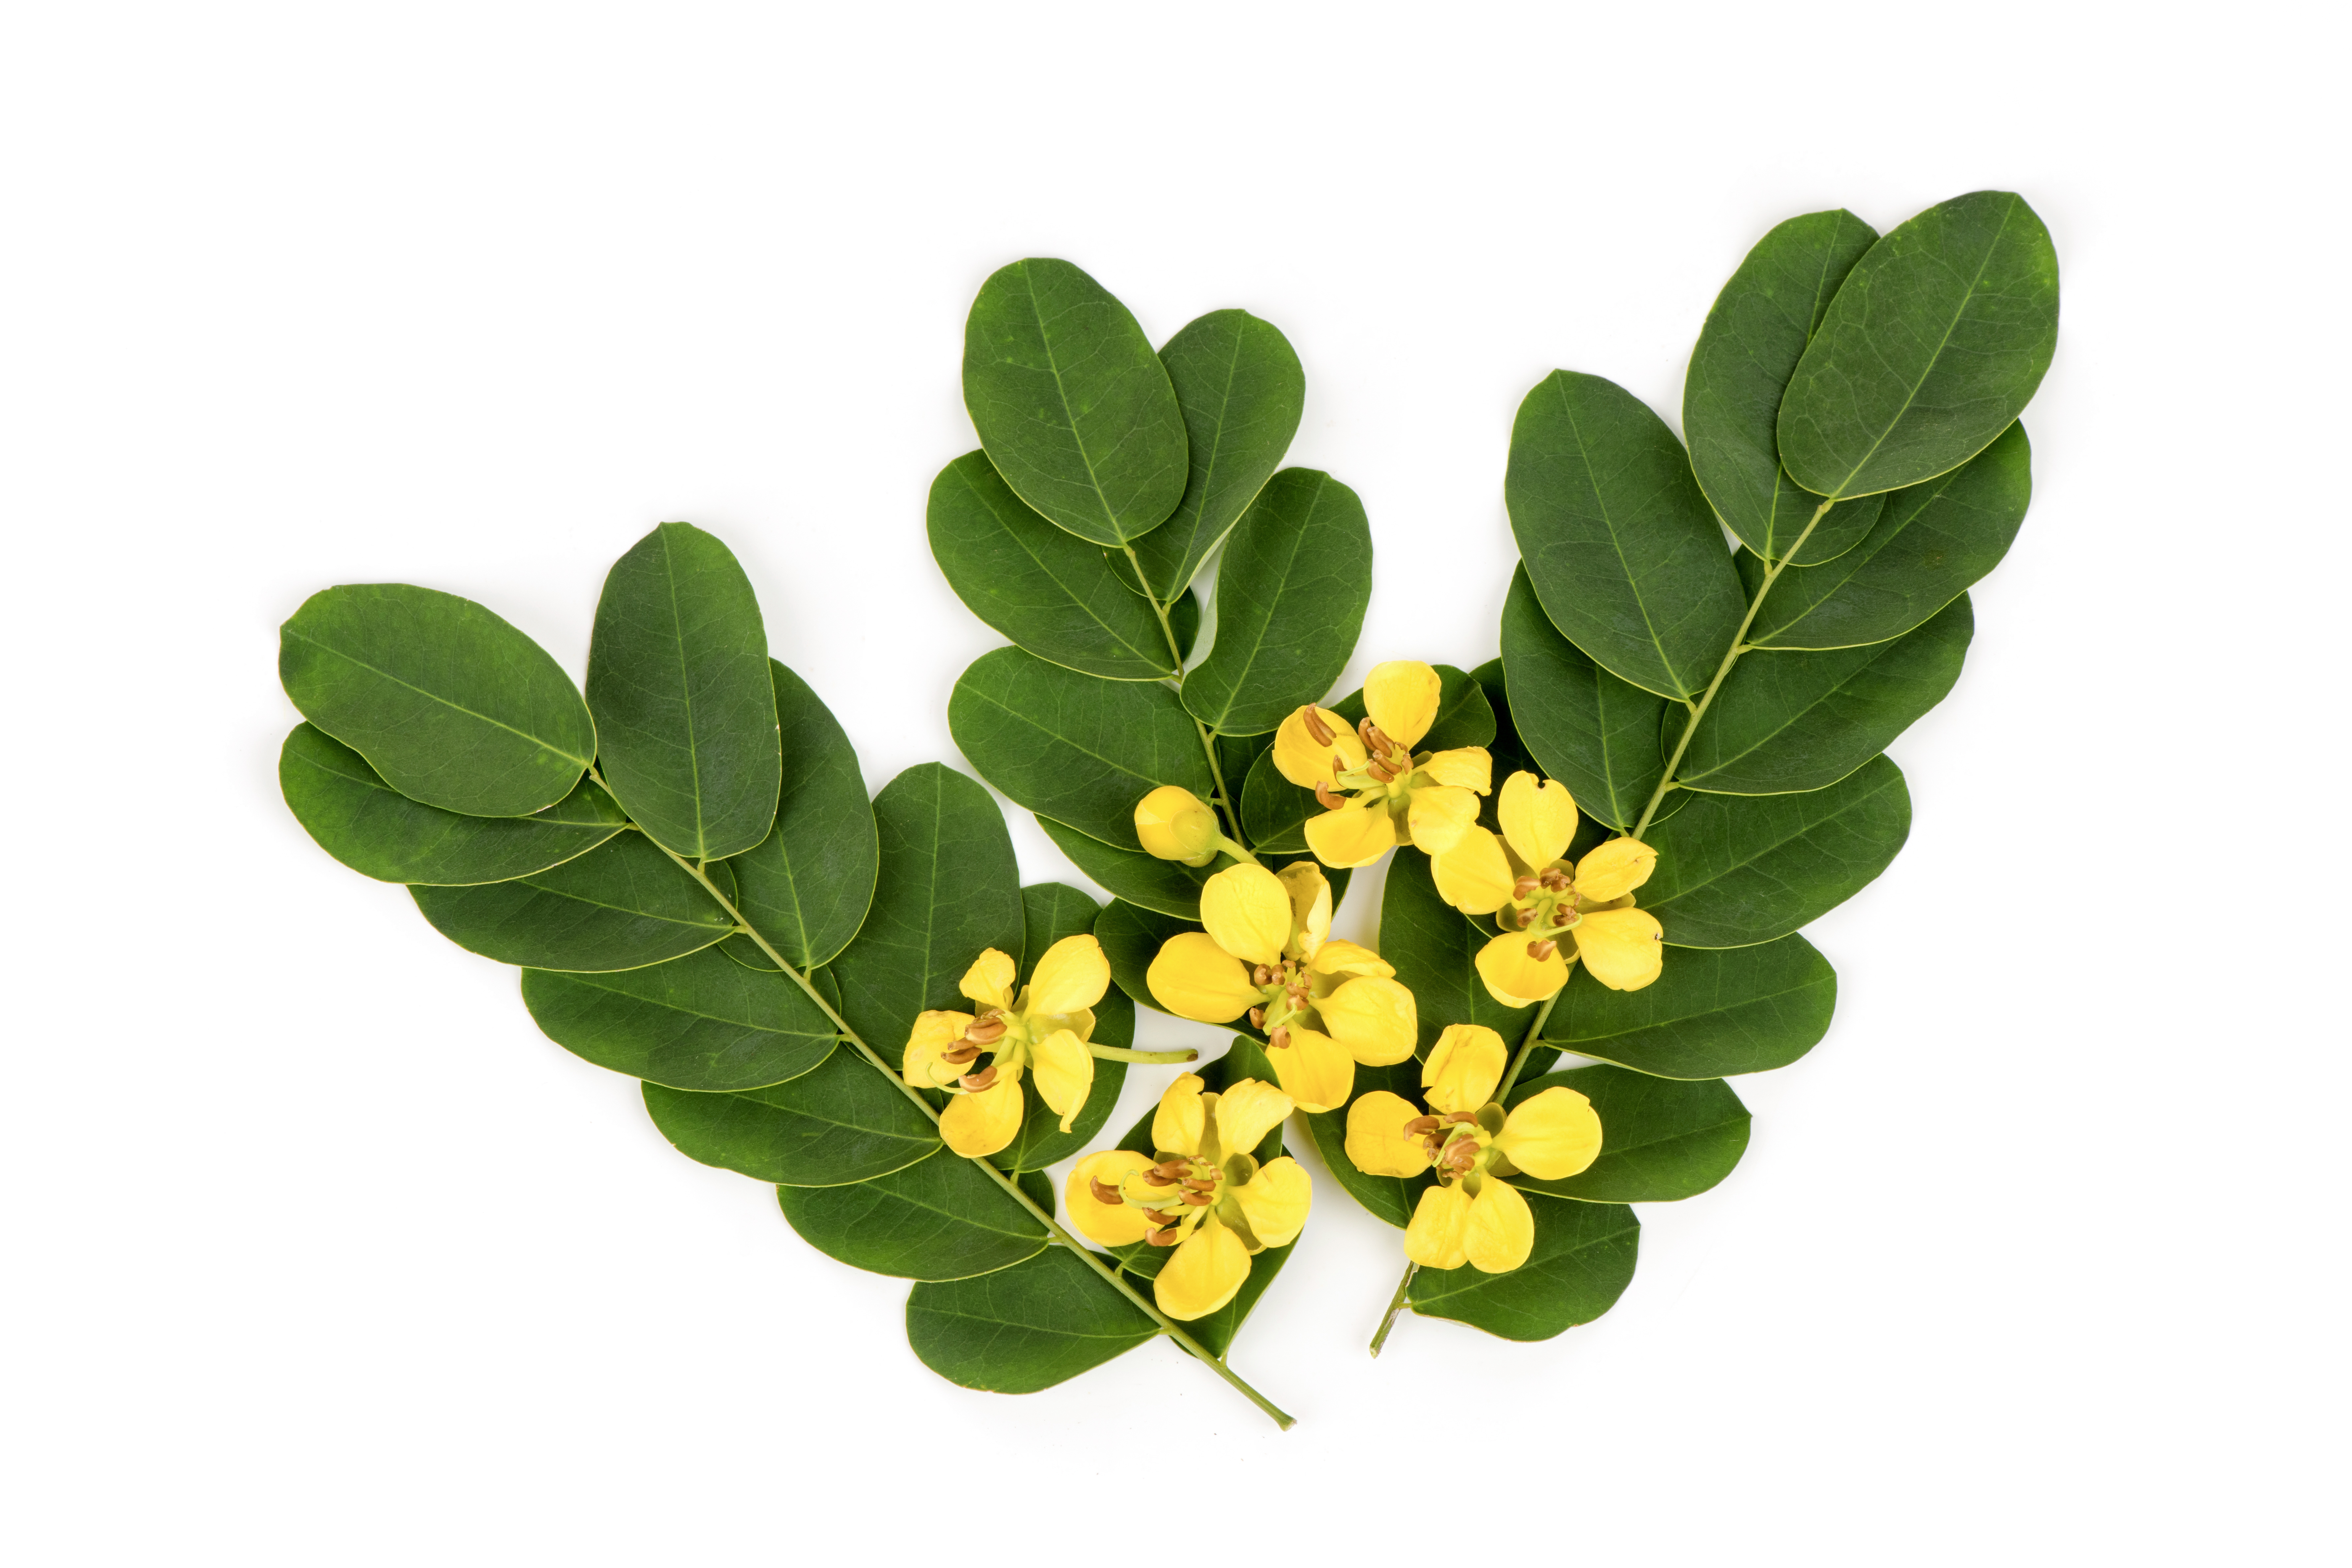 Senna Leaf Extract (Cassia angustifolia)